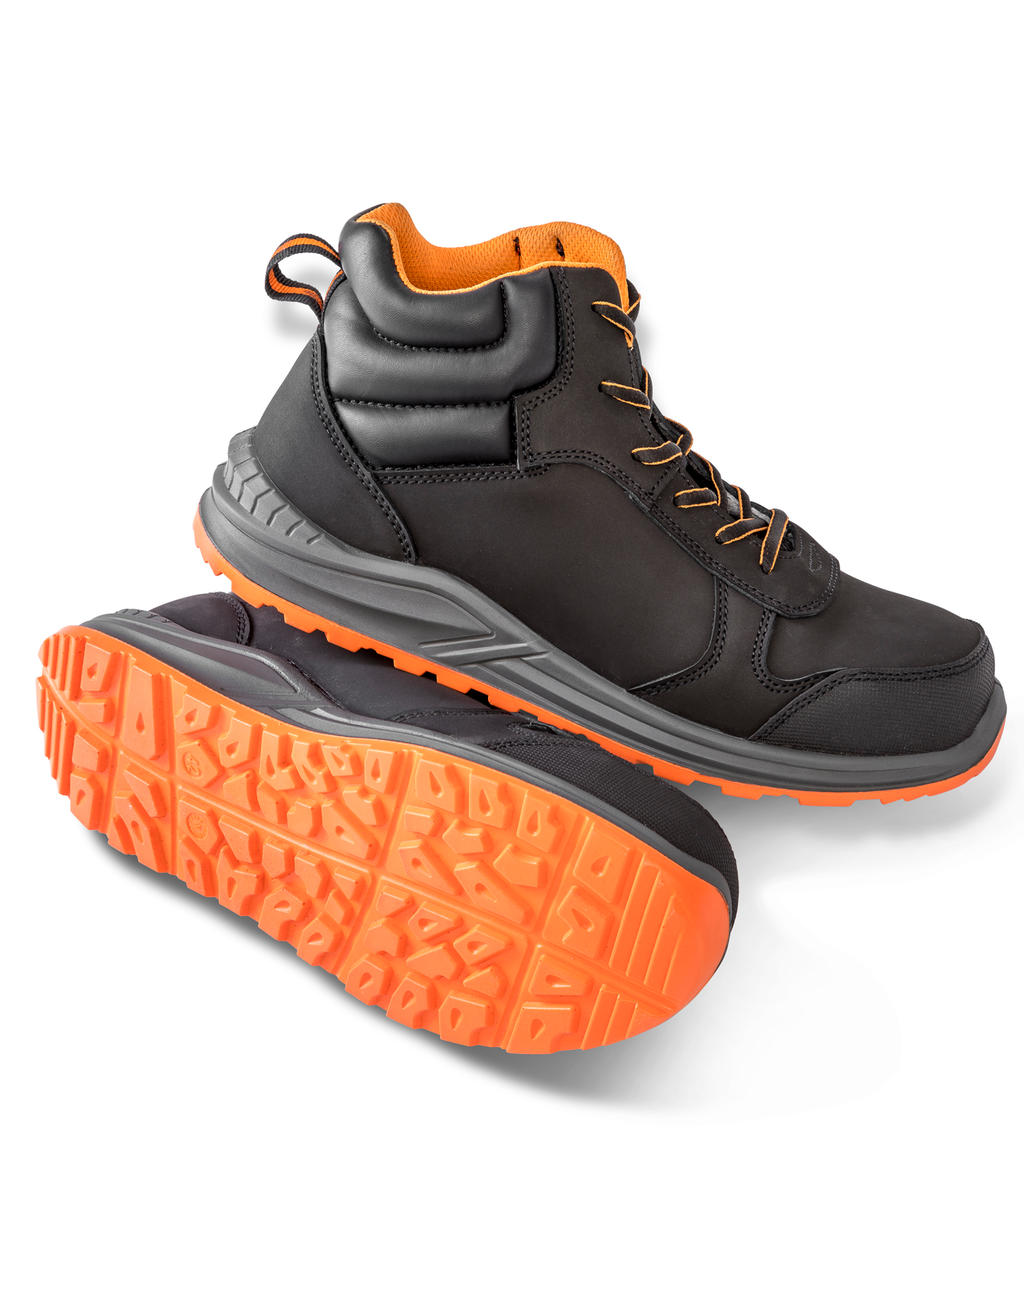 Pracovný obuv Stirling Safety Boot - black/grey/orange